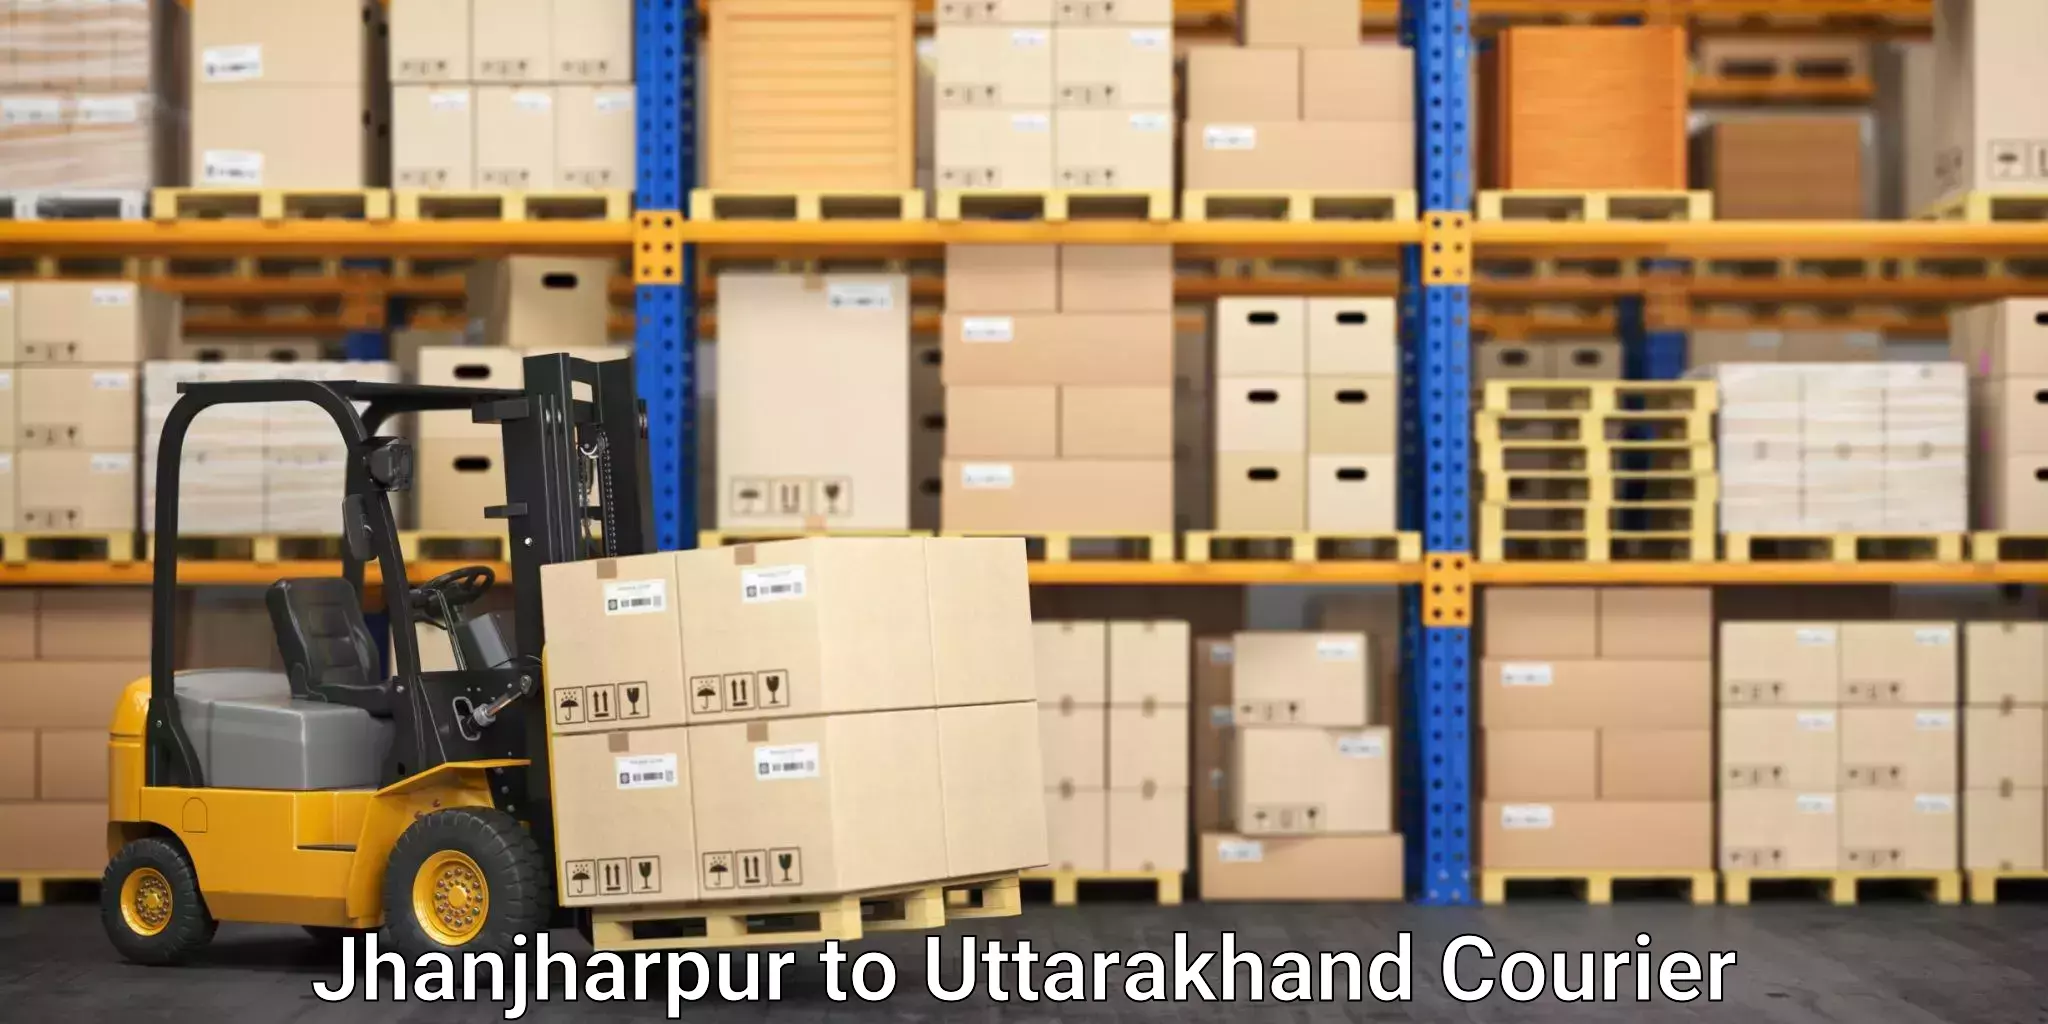 Furniture transport specialists Jhanjharpur to Kashipur